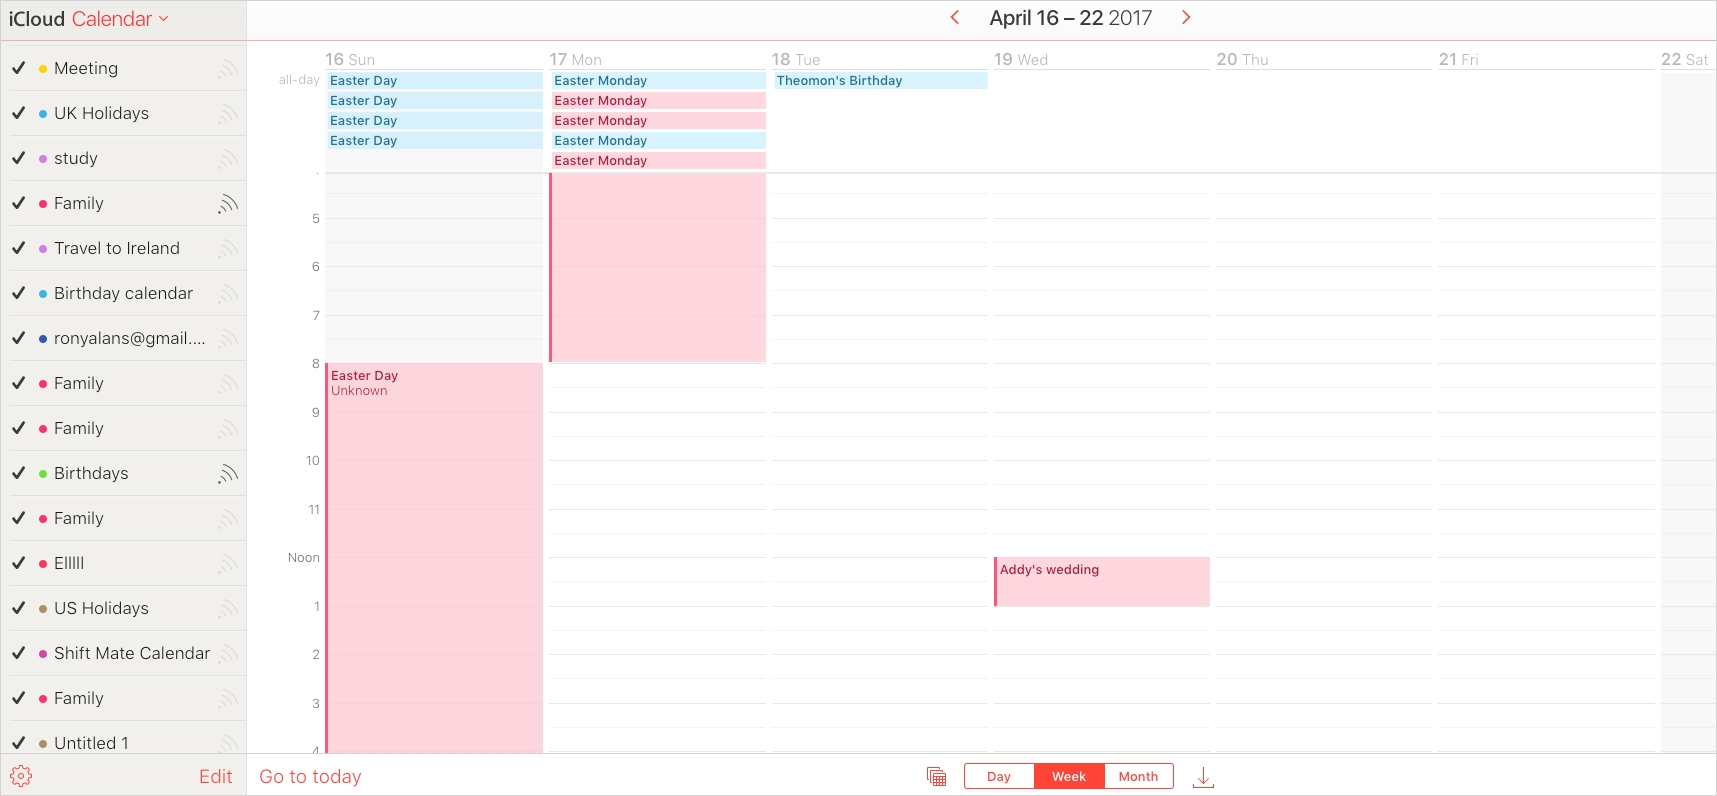 How To Print Calendar From Mac Month Calendar Printable